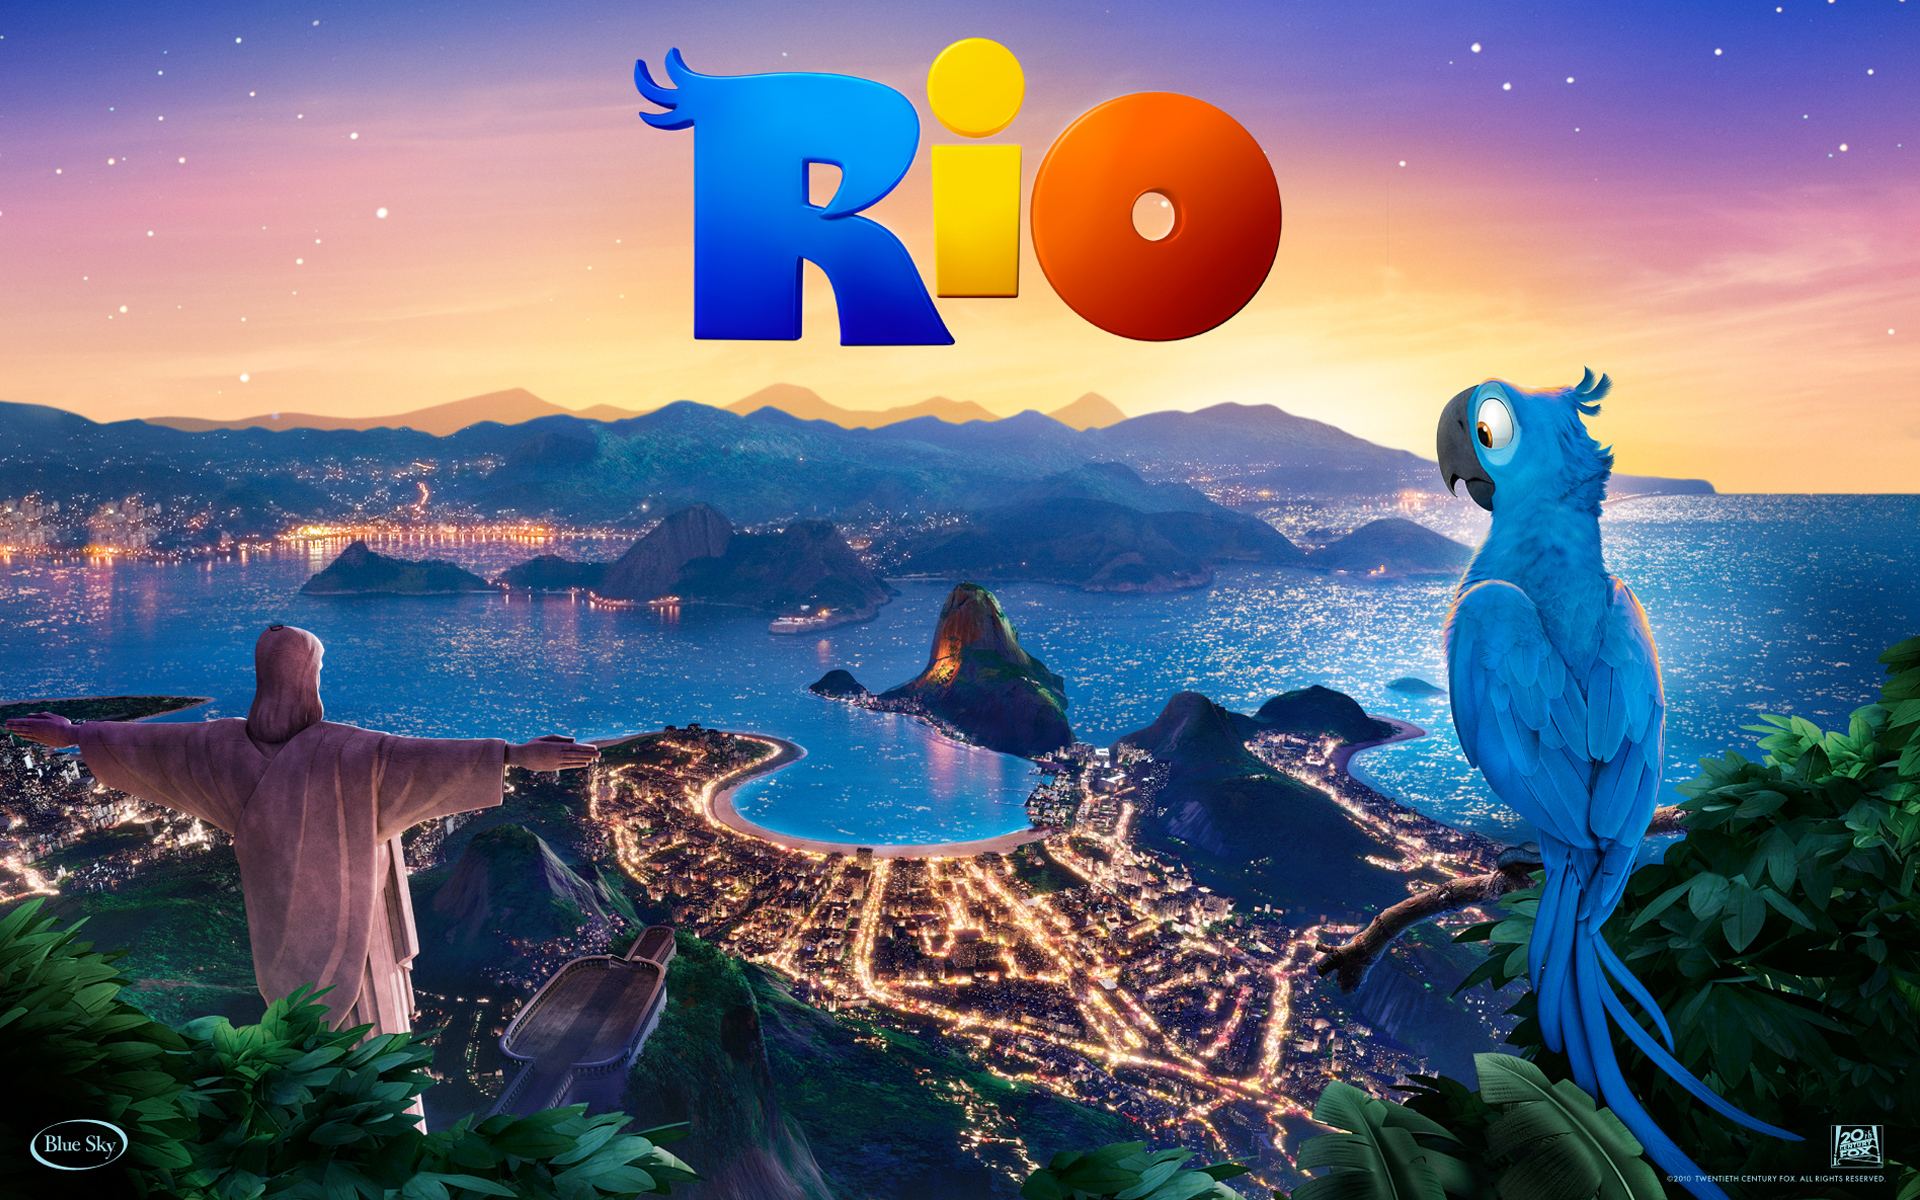 Rio com. Рио-де Жанейро мултфилм "Рио". Попугай из мультика Рио де Жанейро.